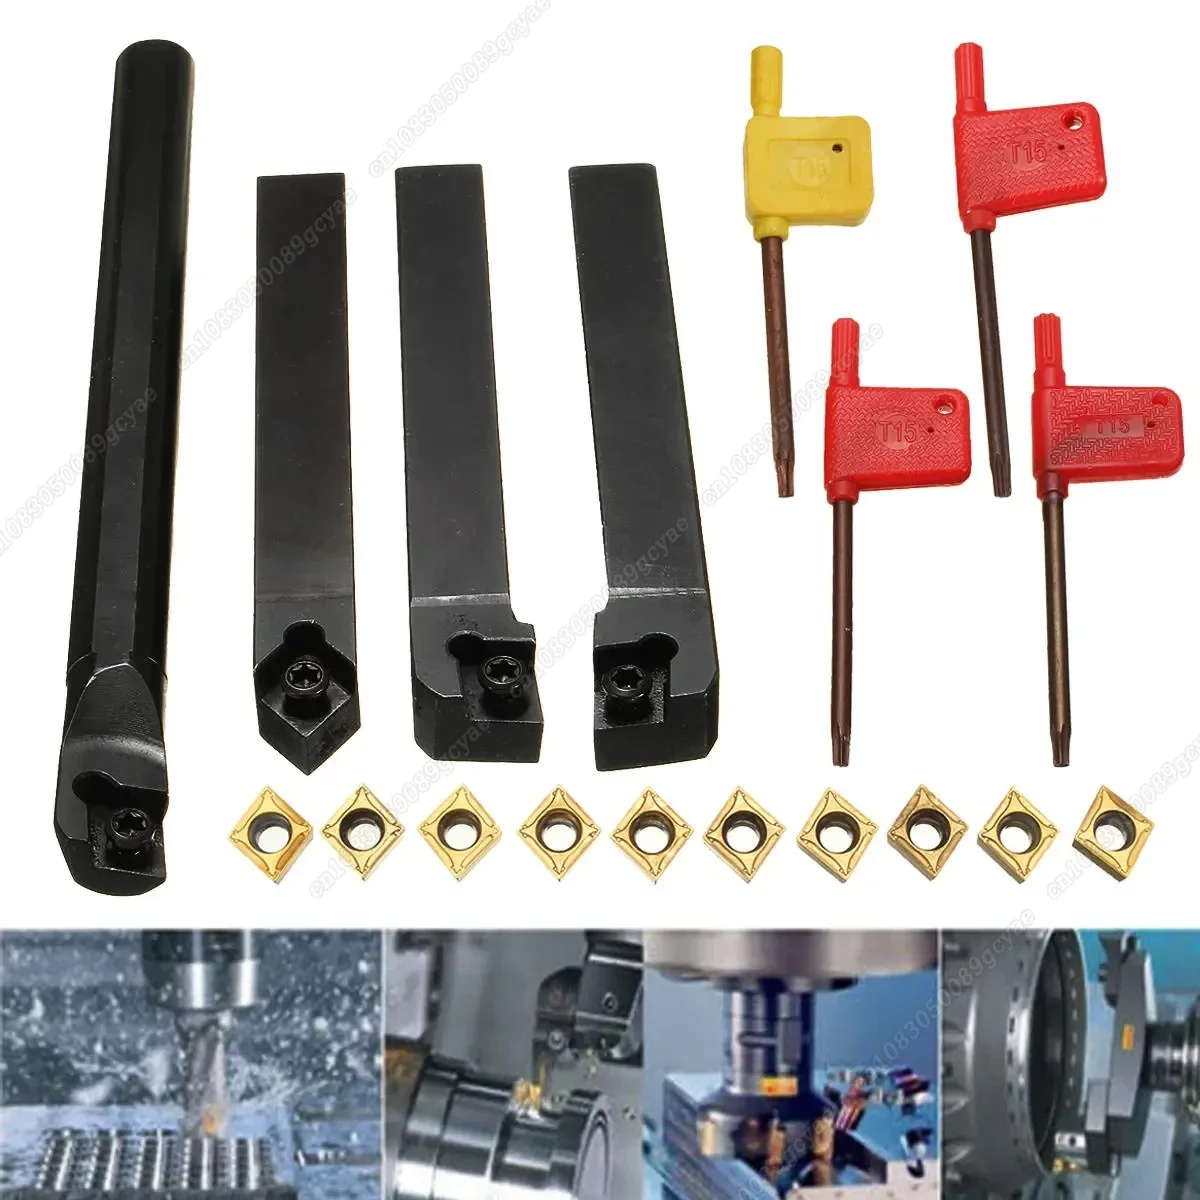 

4Pcs 12mm CNC Lathe Turning Tool Holder Boring Bar S12M-SCLCR09 SCLCR1212H09 SCLCL1212H09 SCMCN1212H09 + 10Pcs Insert CCMT09T304